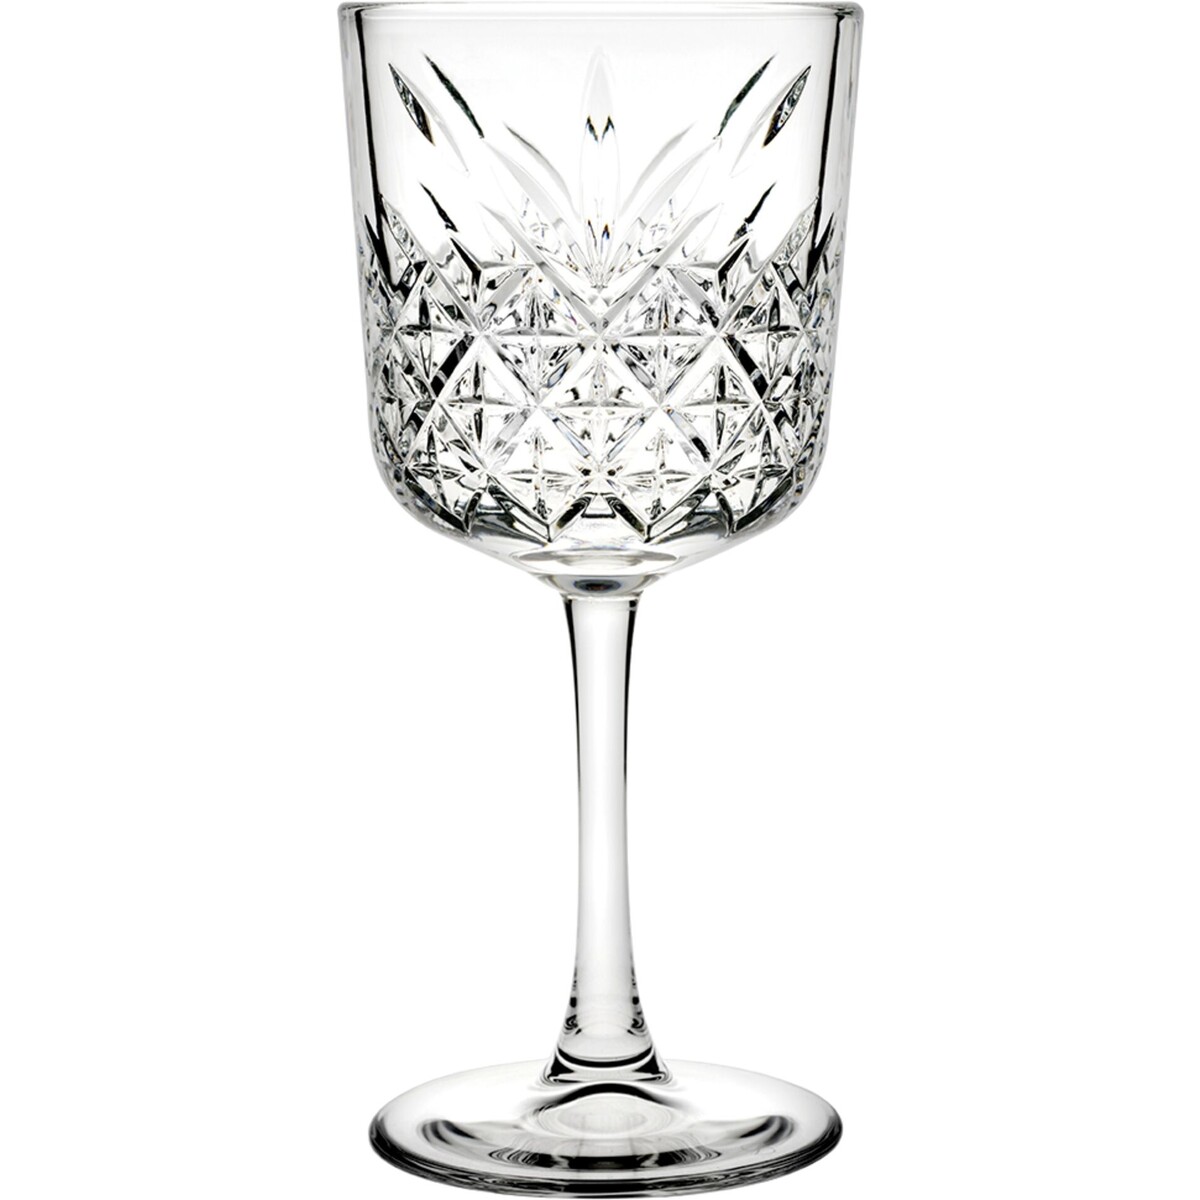 Glasserie "Timeless" Weinglas 330ml